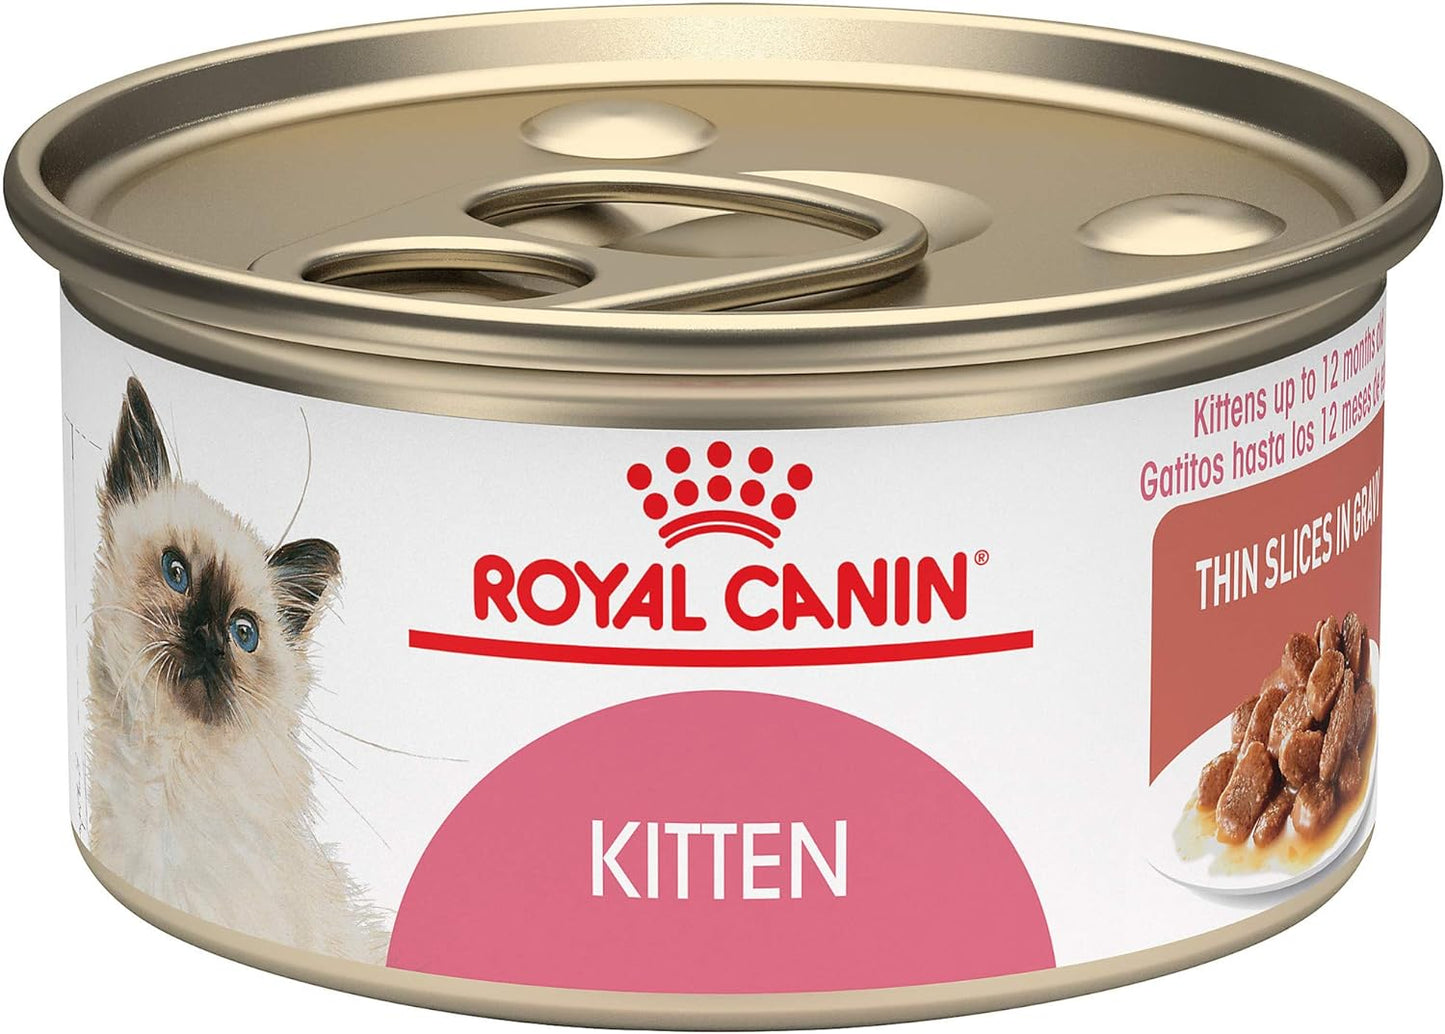 ROYAL CANIN HEALTH NUTR KITTEN 12PK 3z